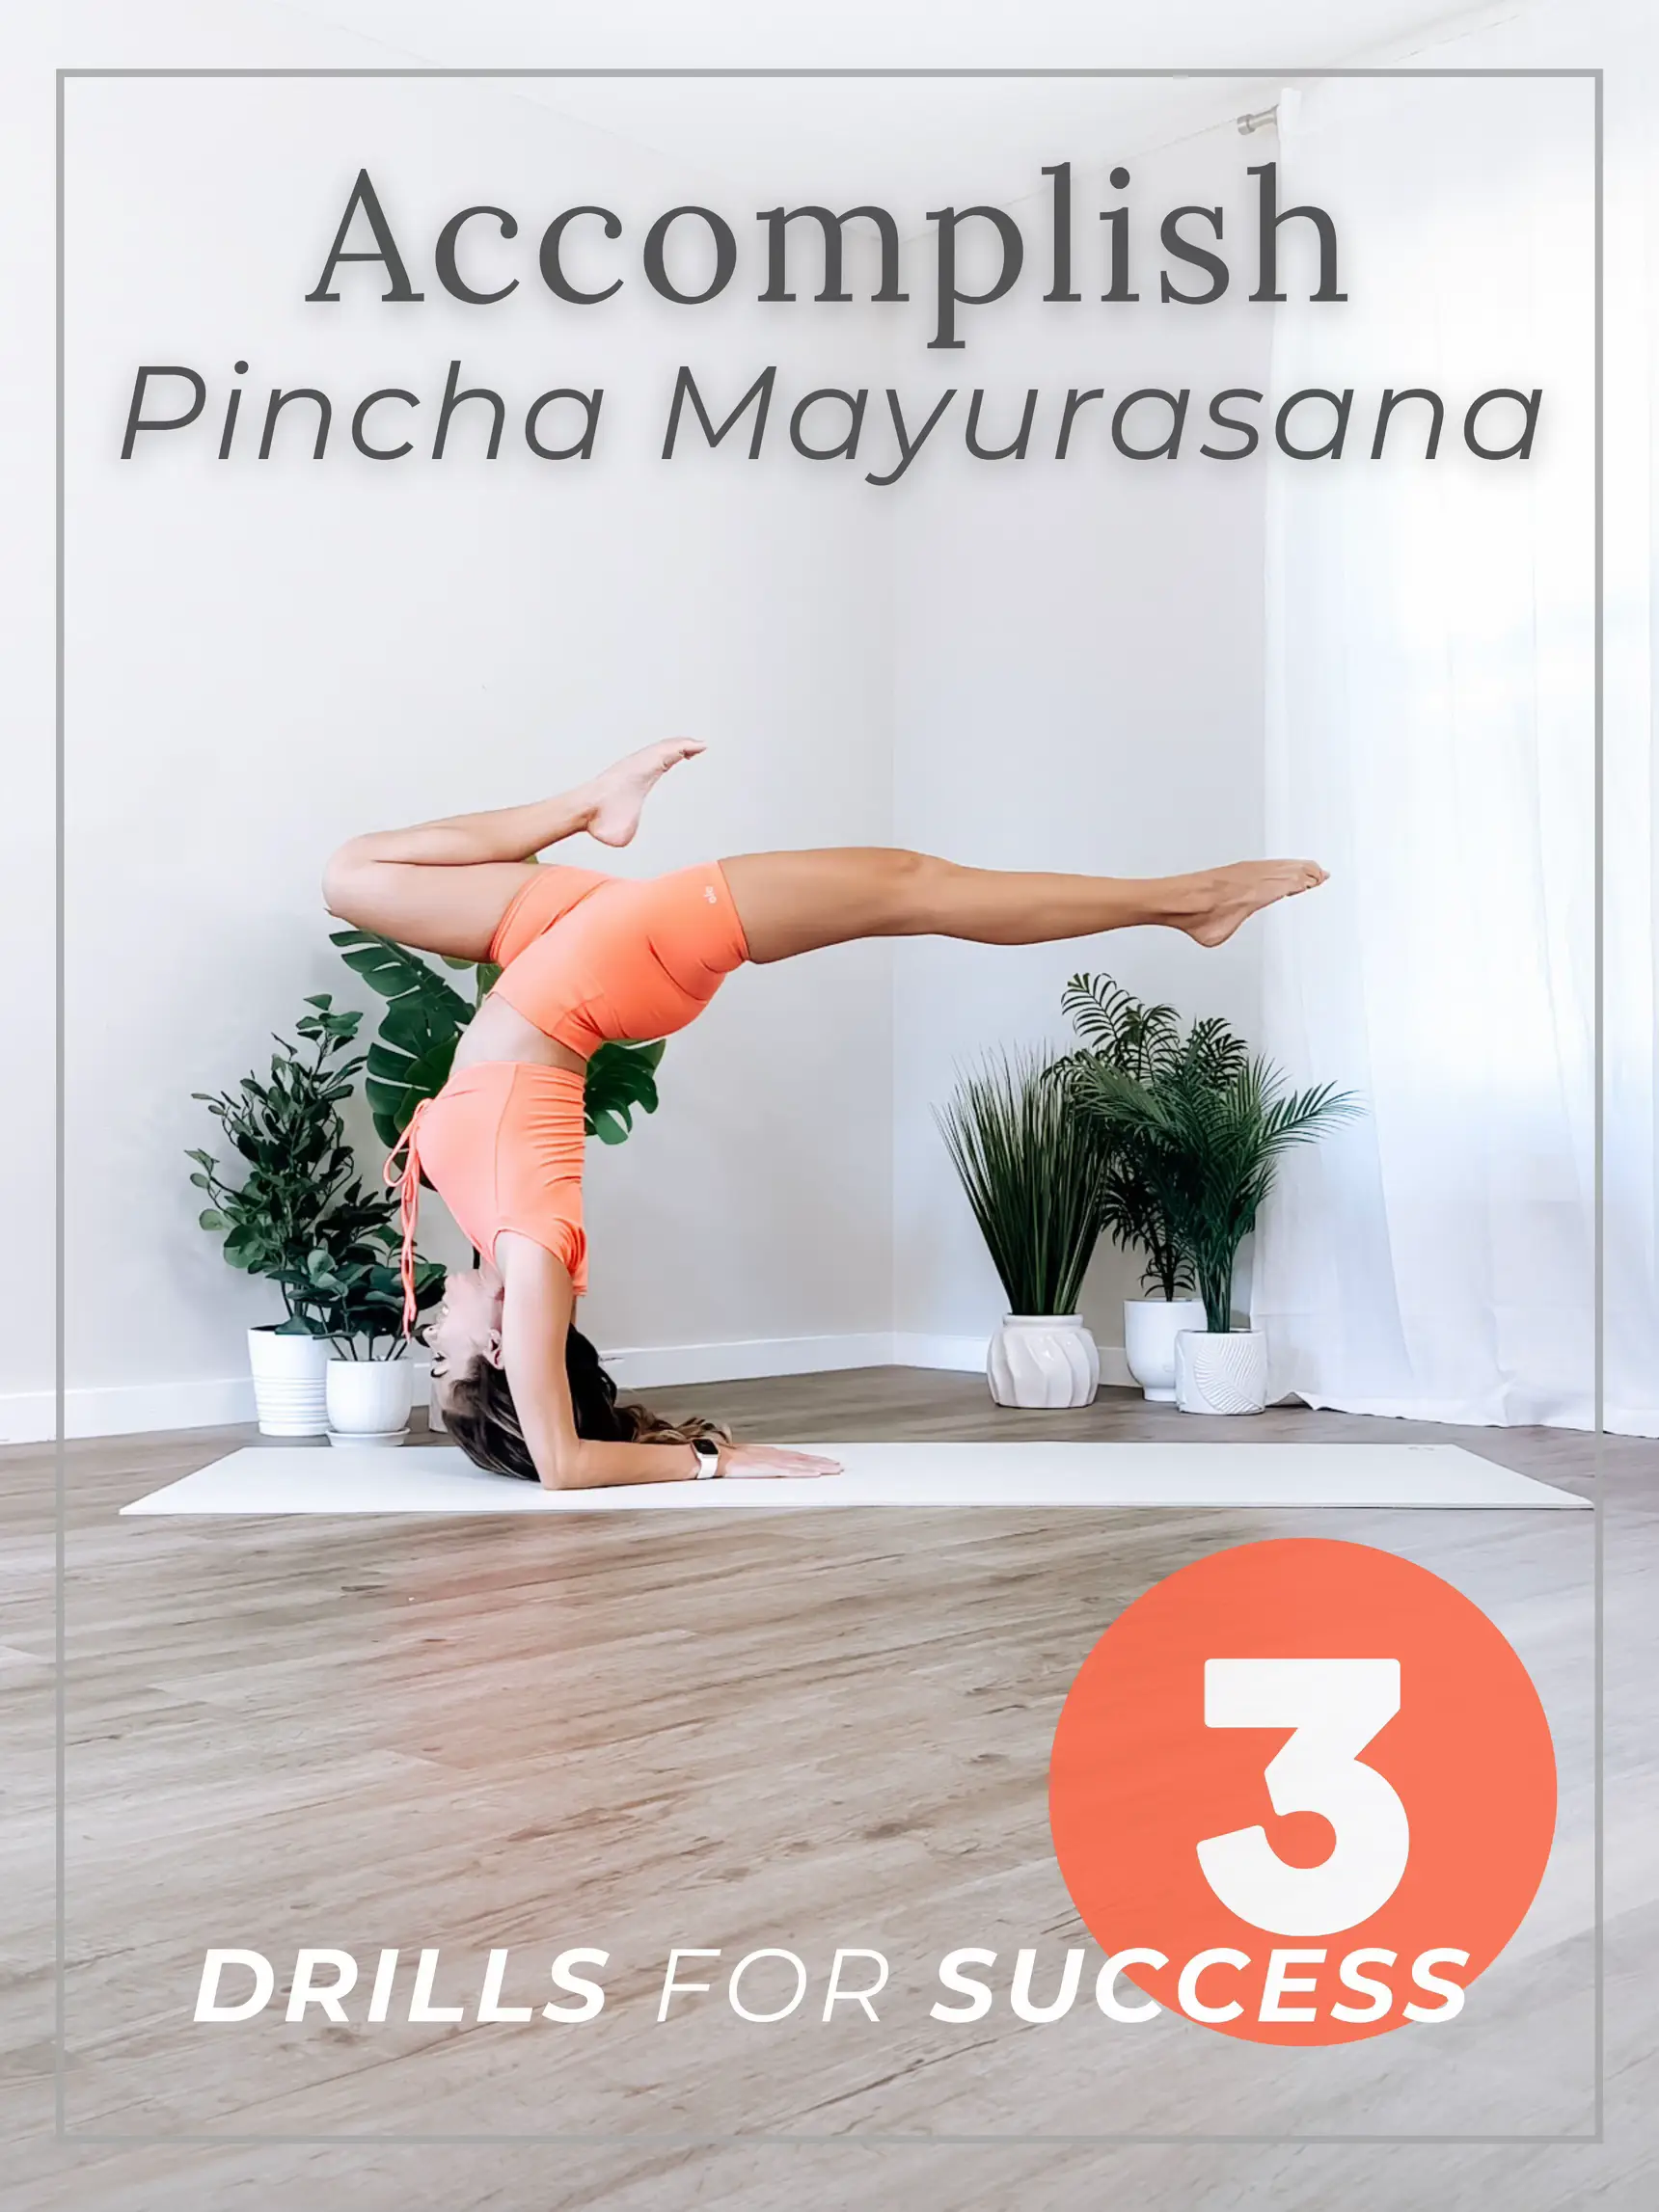 What Is Pincha Mayurasana? - YOGA PRACTICE